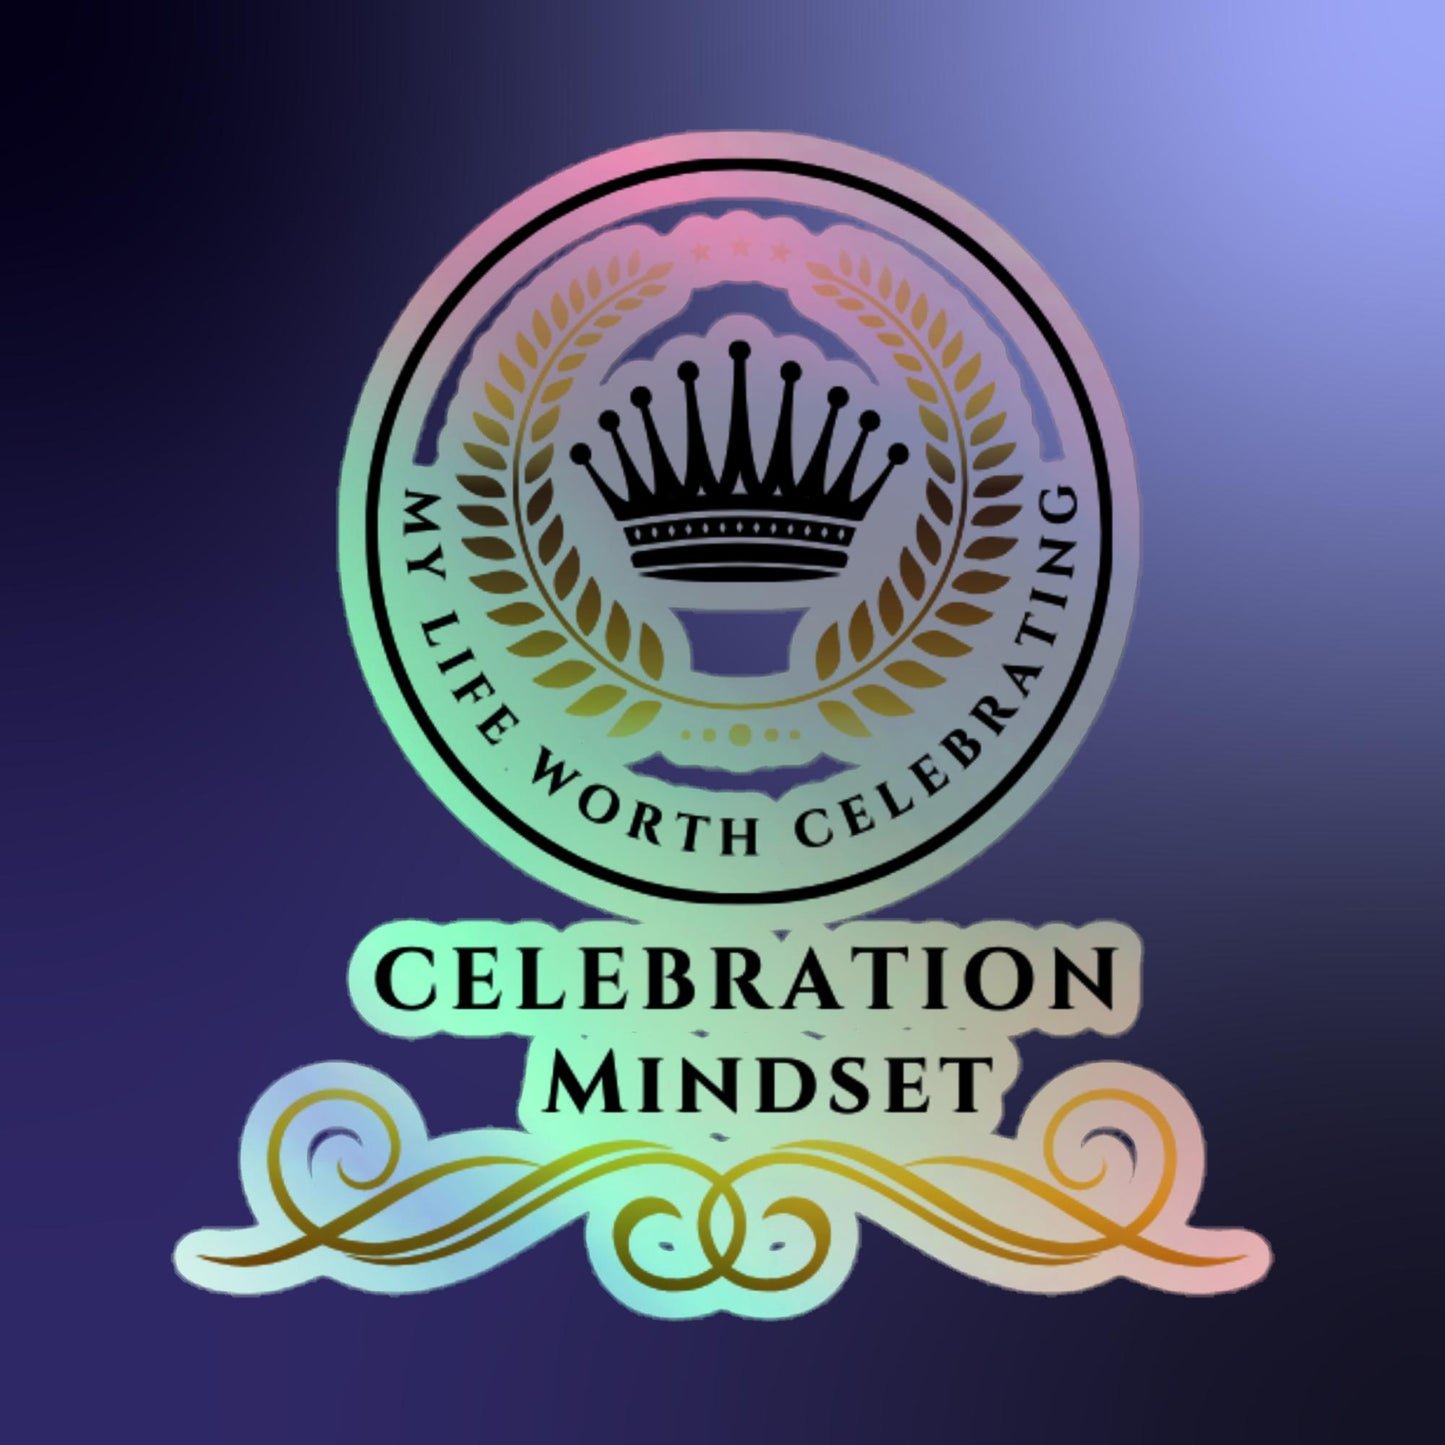 Celebration Mindset: Holographic stickers